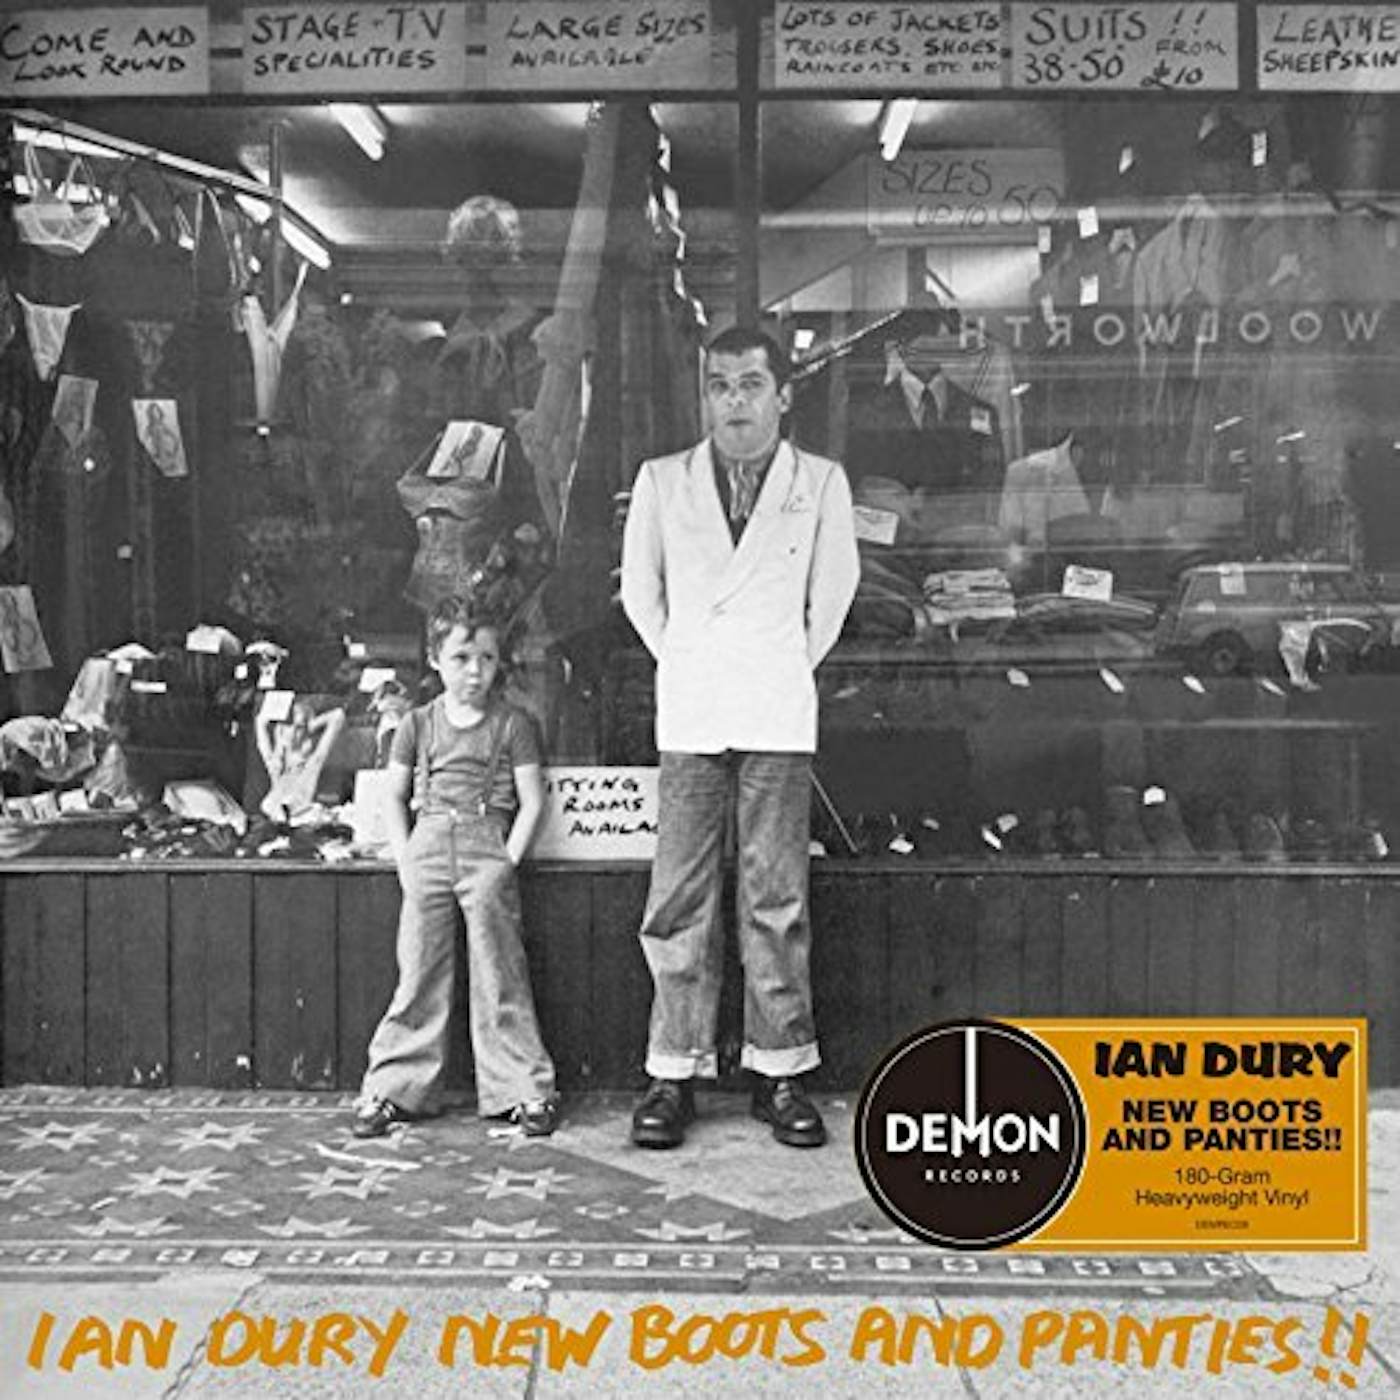 Ian Dury New Boots And Panties Vinyl Record